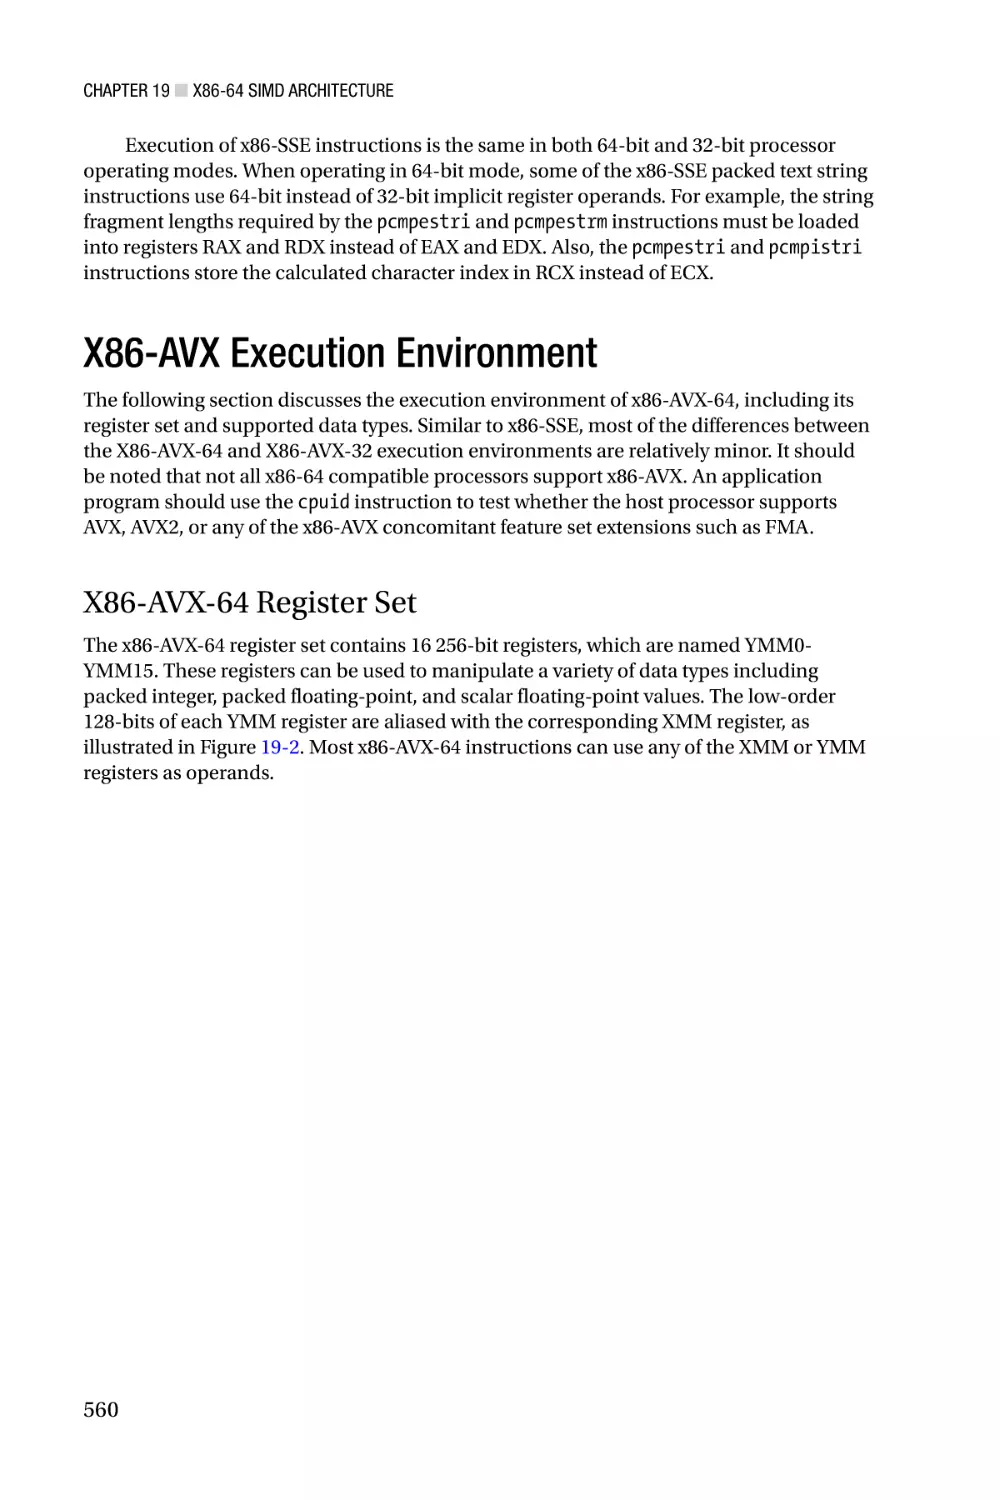 X86-AVX Execution Environment
X86-AVX-64 Register Set